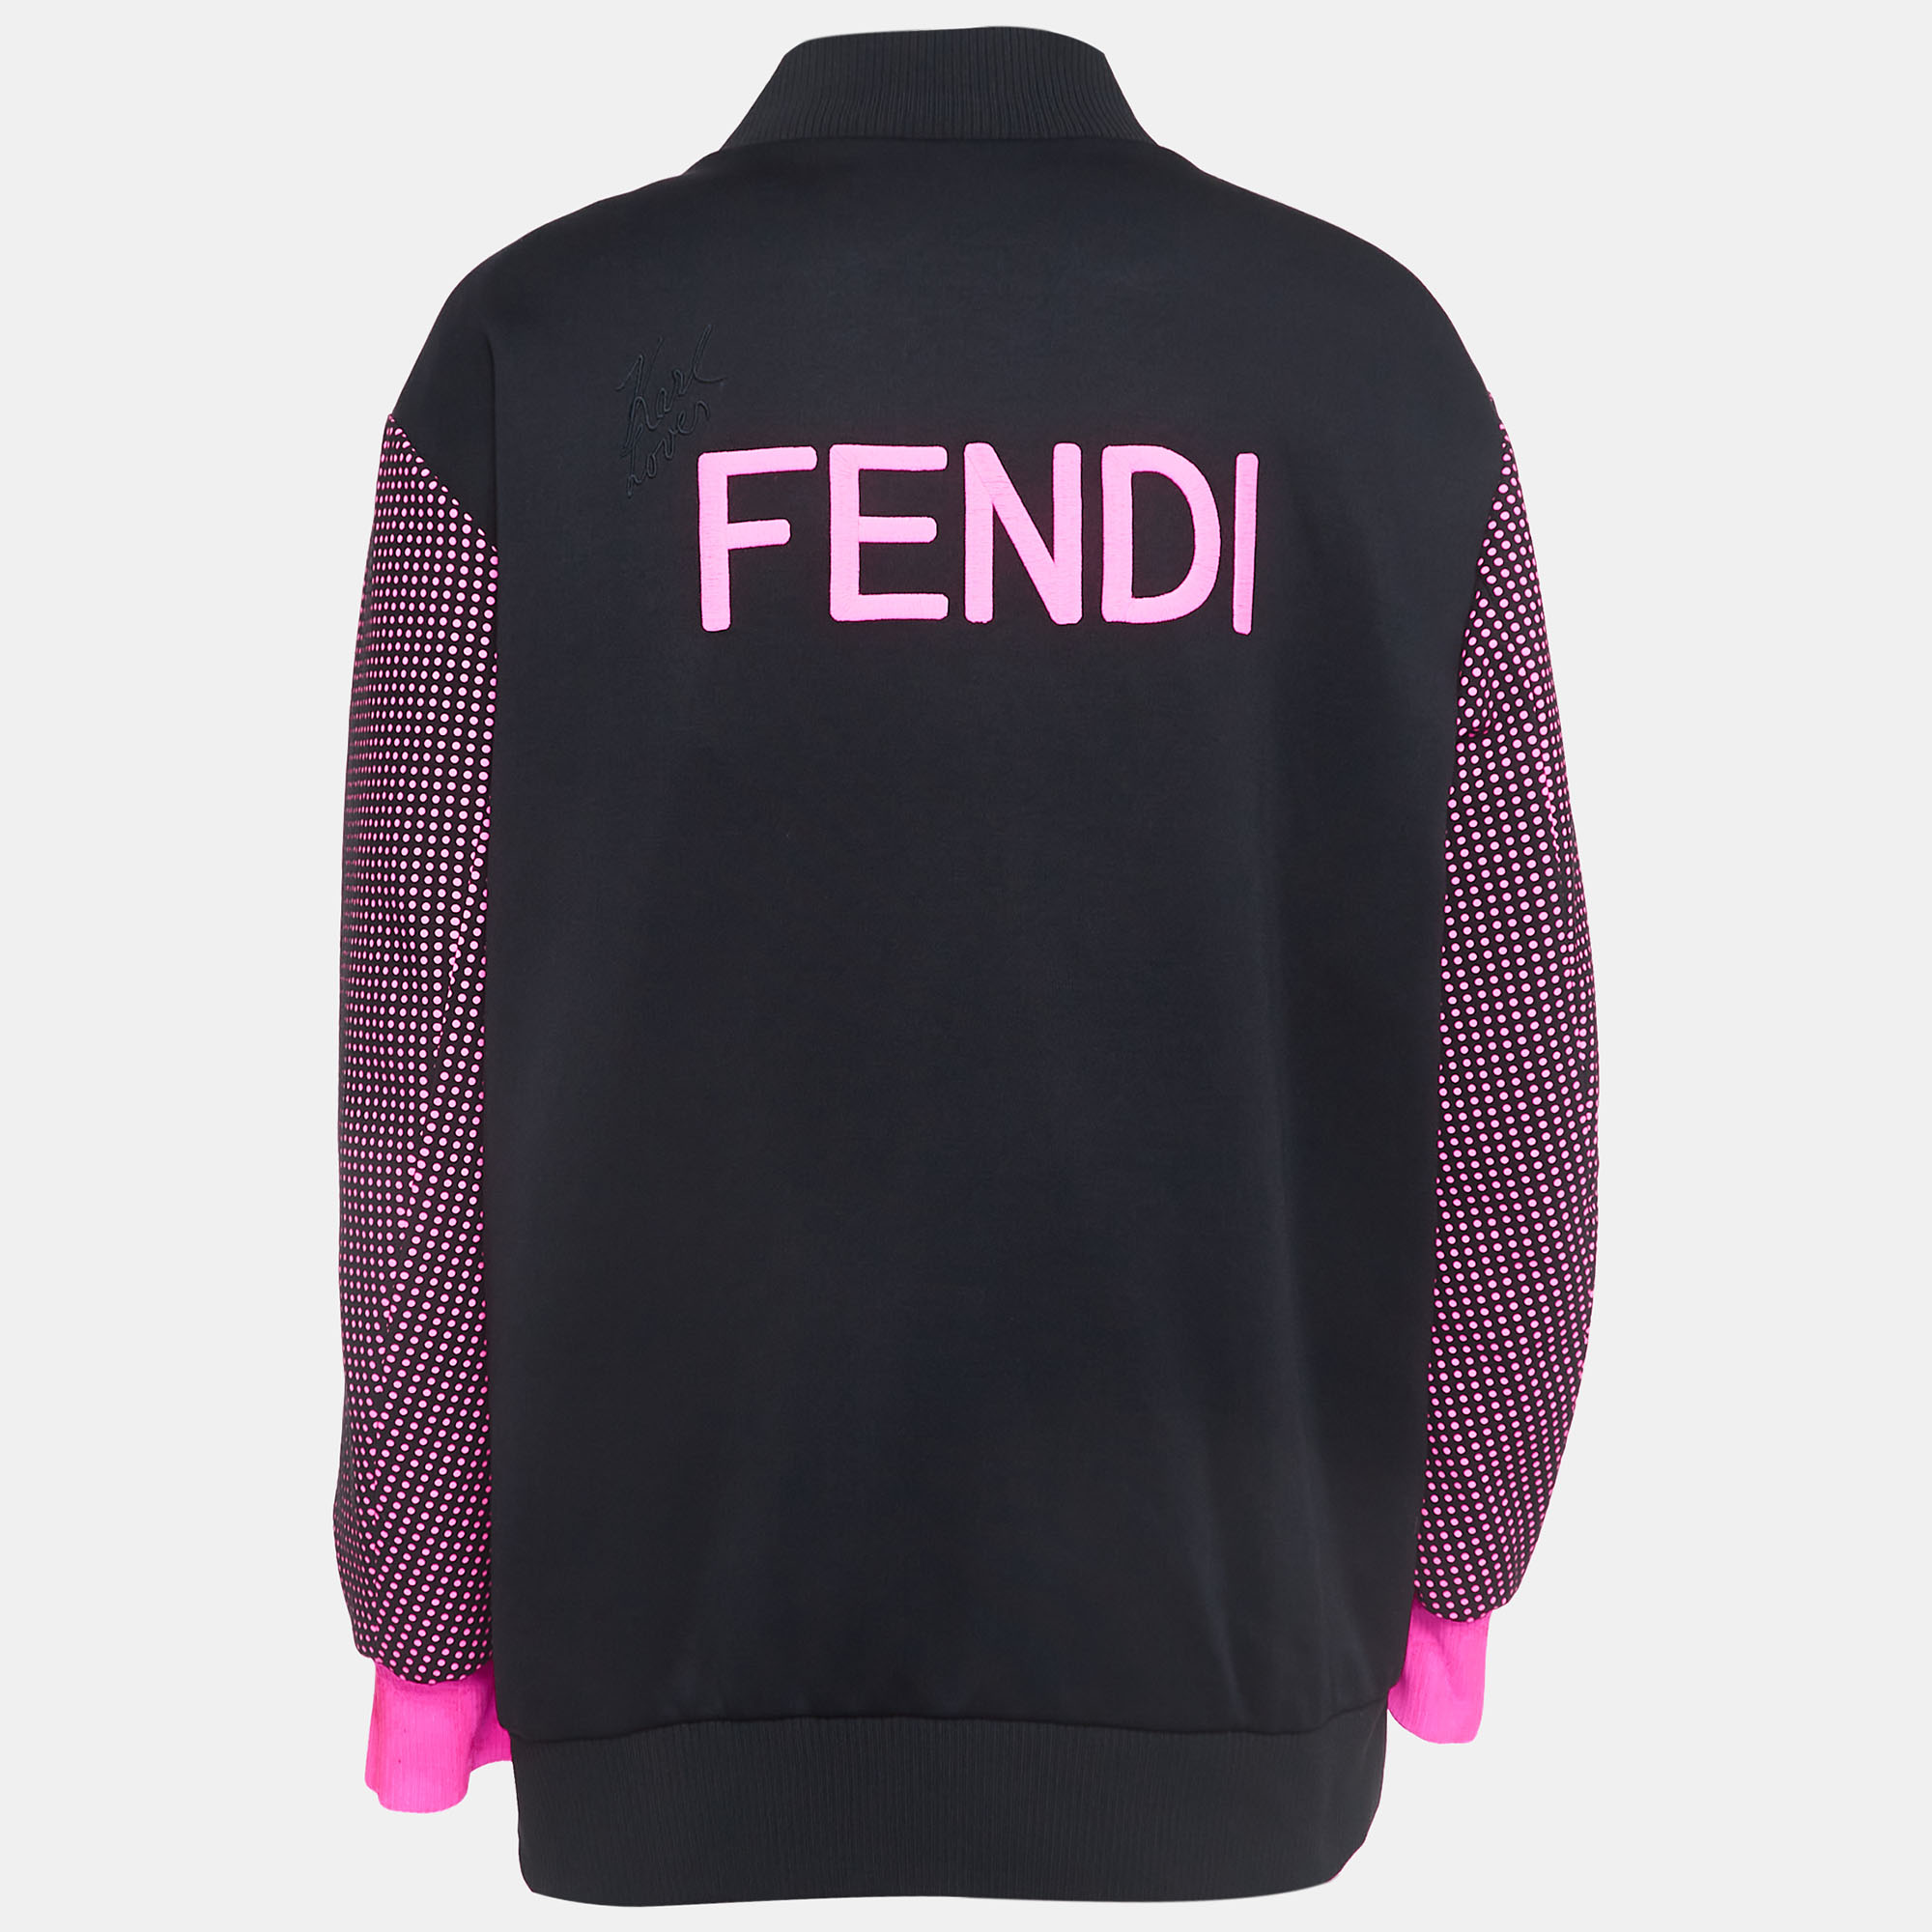 

Fendi Neon Pink/Black Polka Dots Synthetic Applique Detail Bomber Jacket